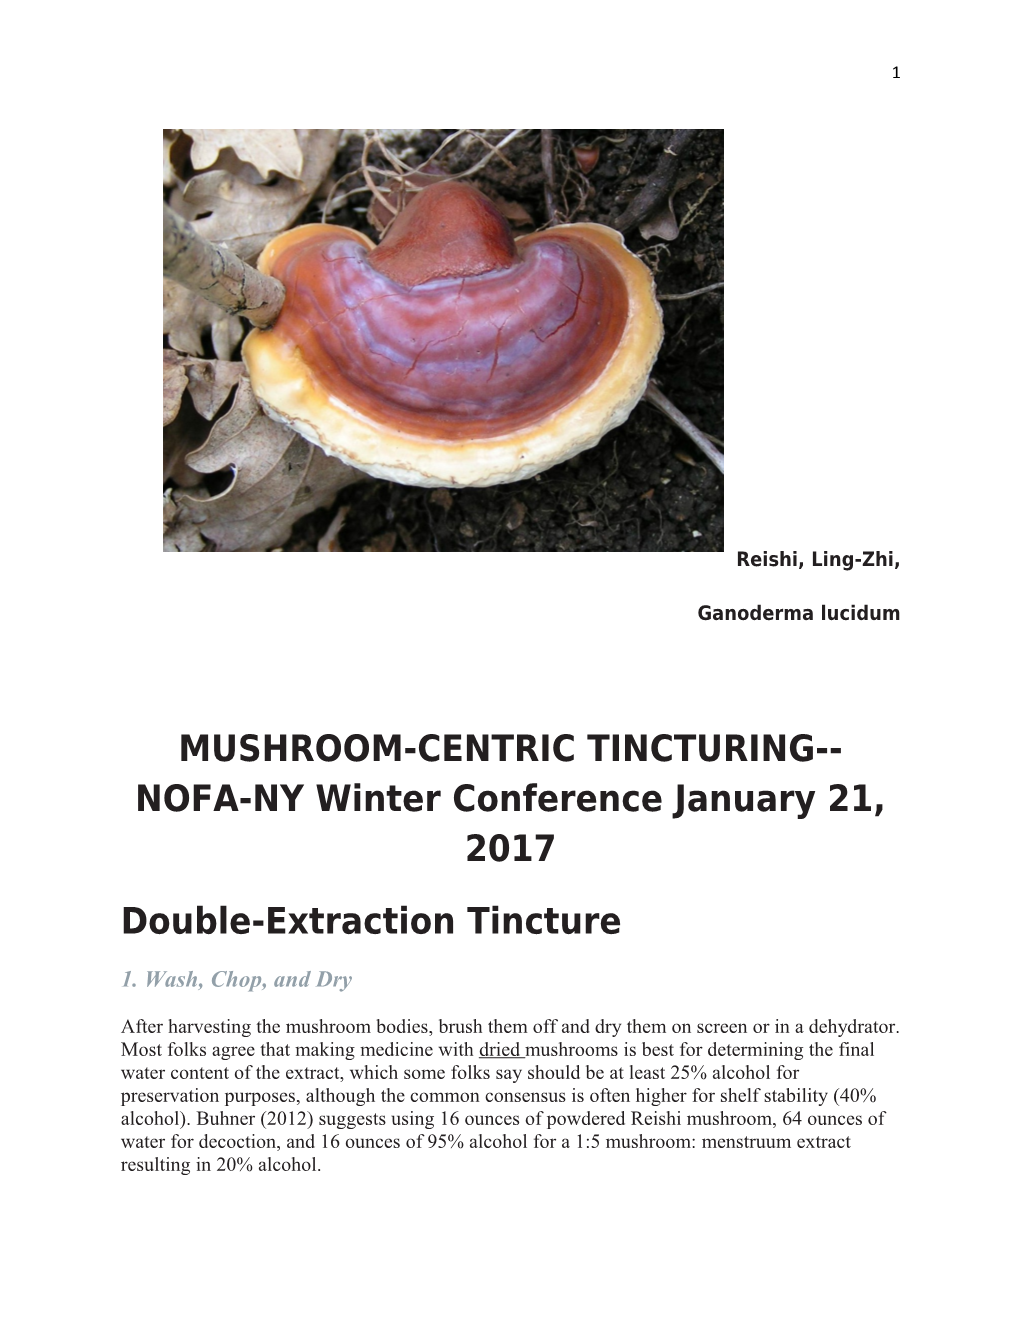 MUSHROOM-CENTRIC TINCTURING NOFA-NY Winter Conference January 21, 2017